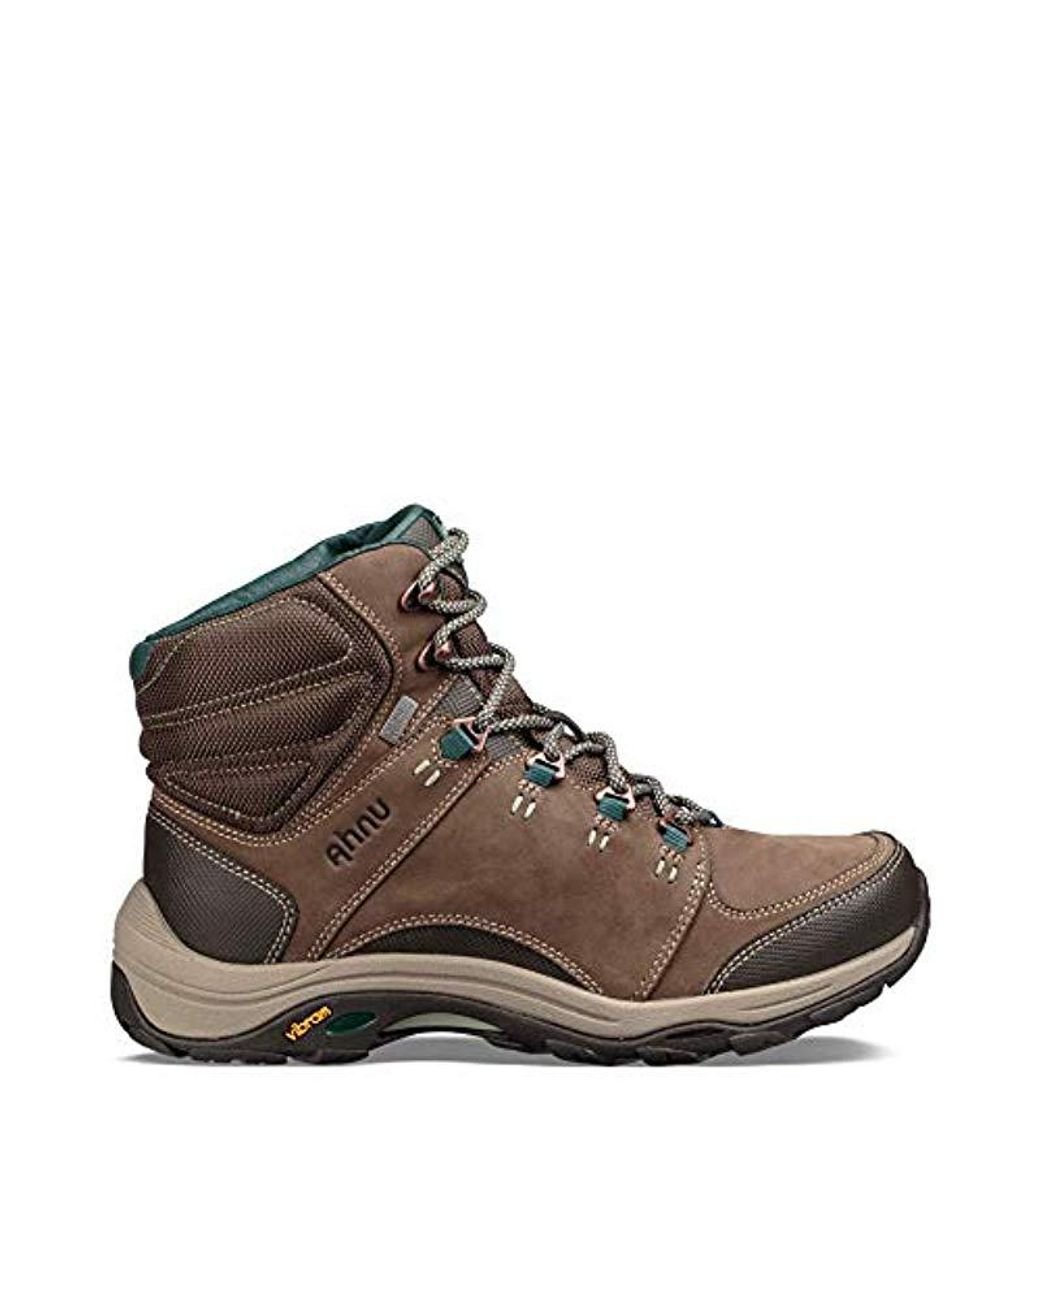 TEVA Montara Mid eVent hiking boots women's size 7 *NEW* 